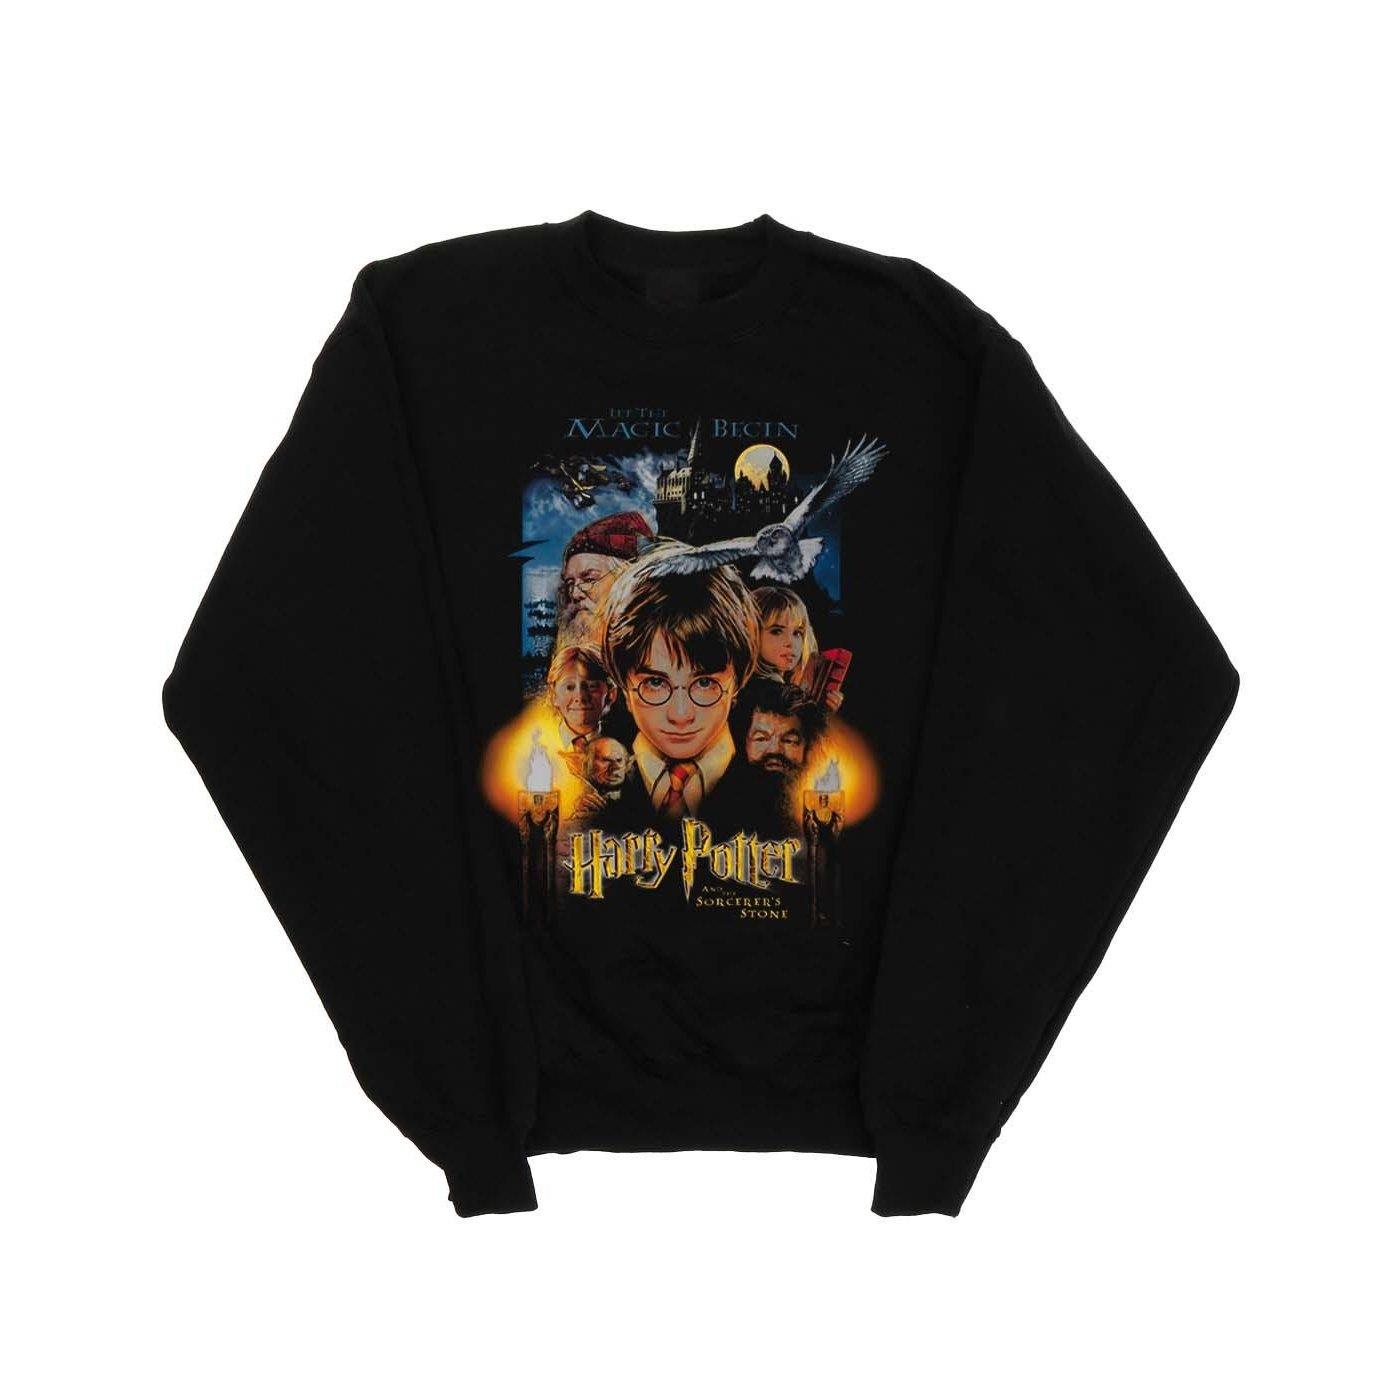 The Sorcerer's Stone Poster Sweatshirt Herren Schwarz XL von Harry Potter